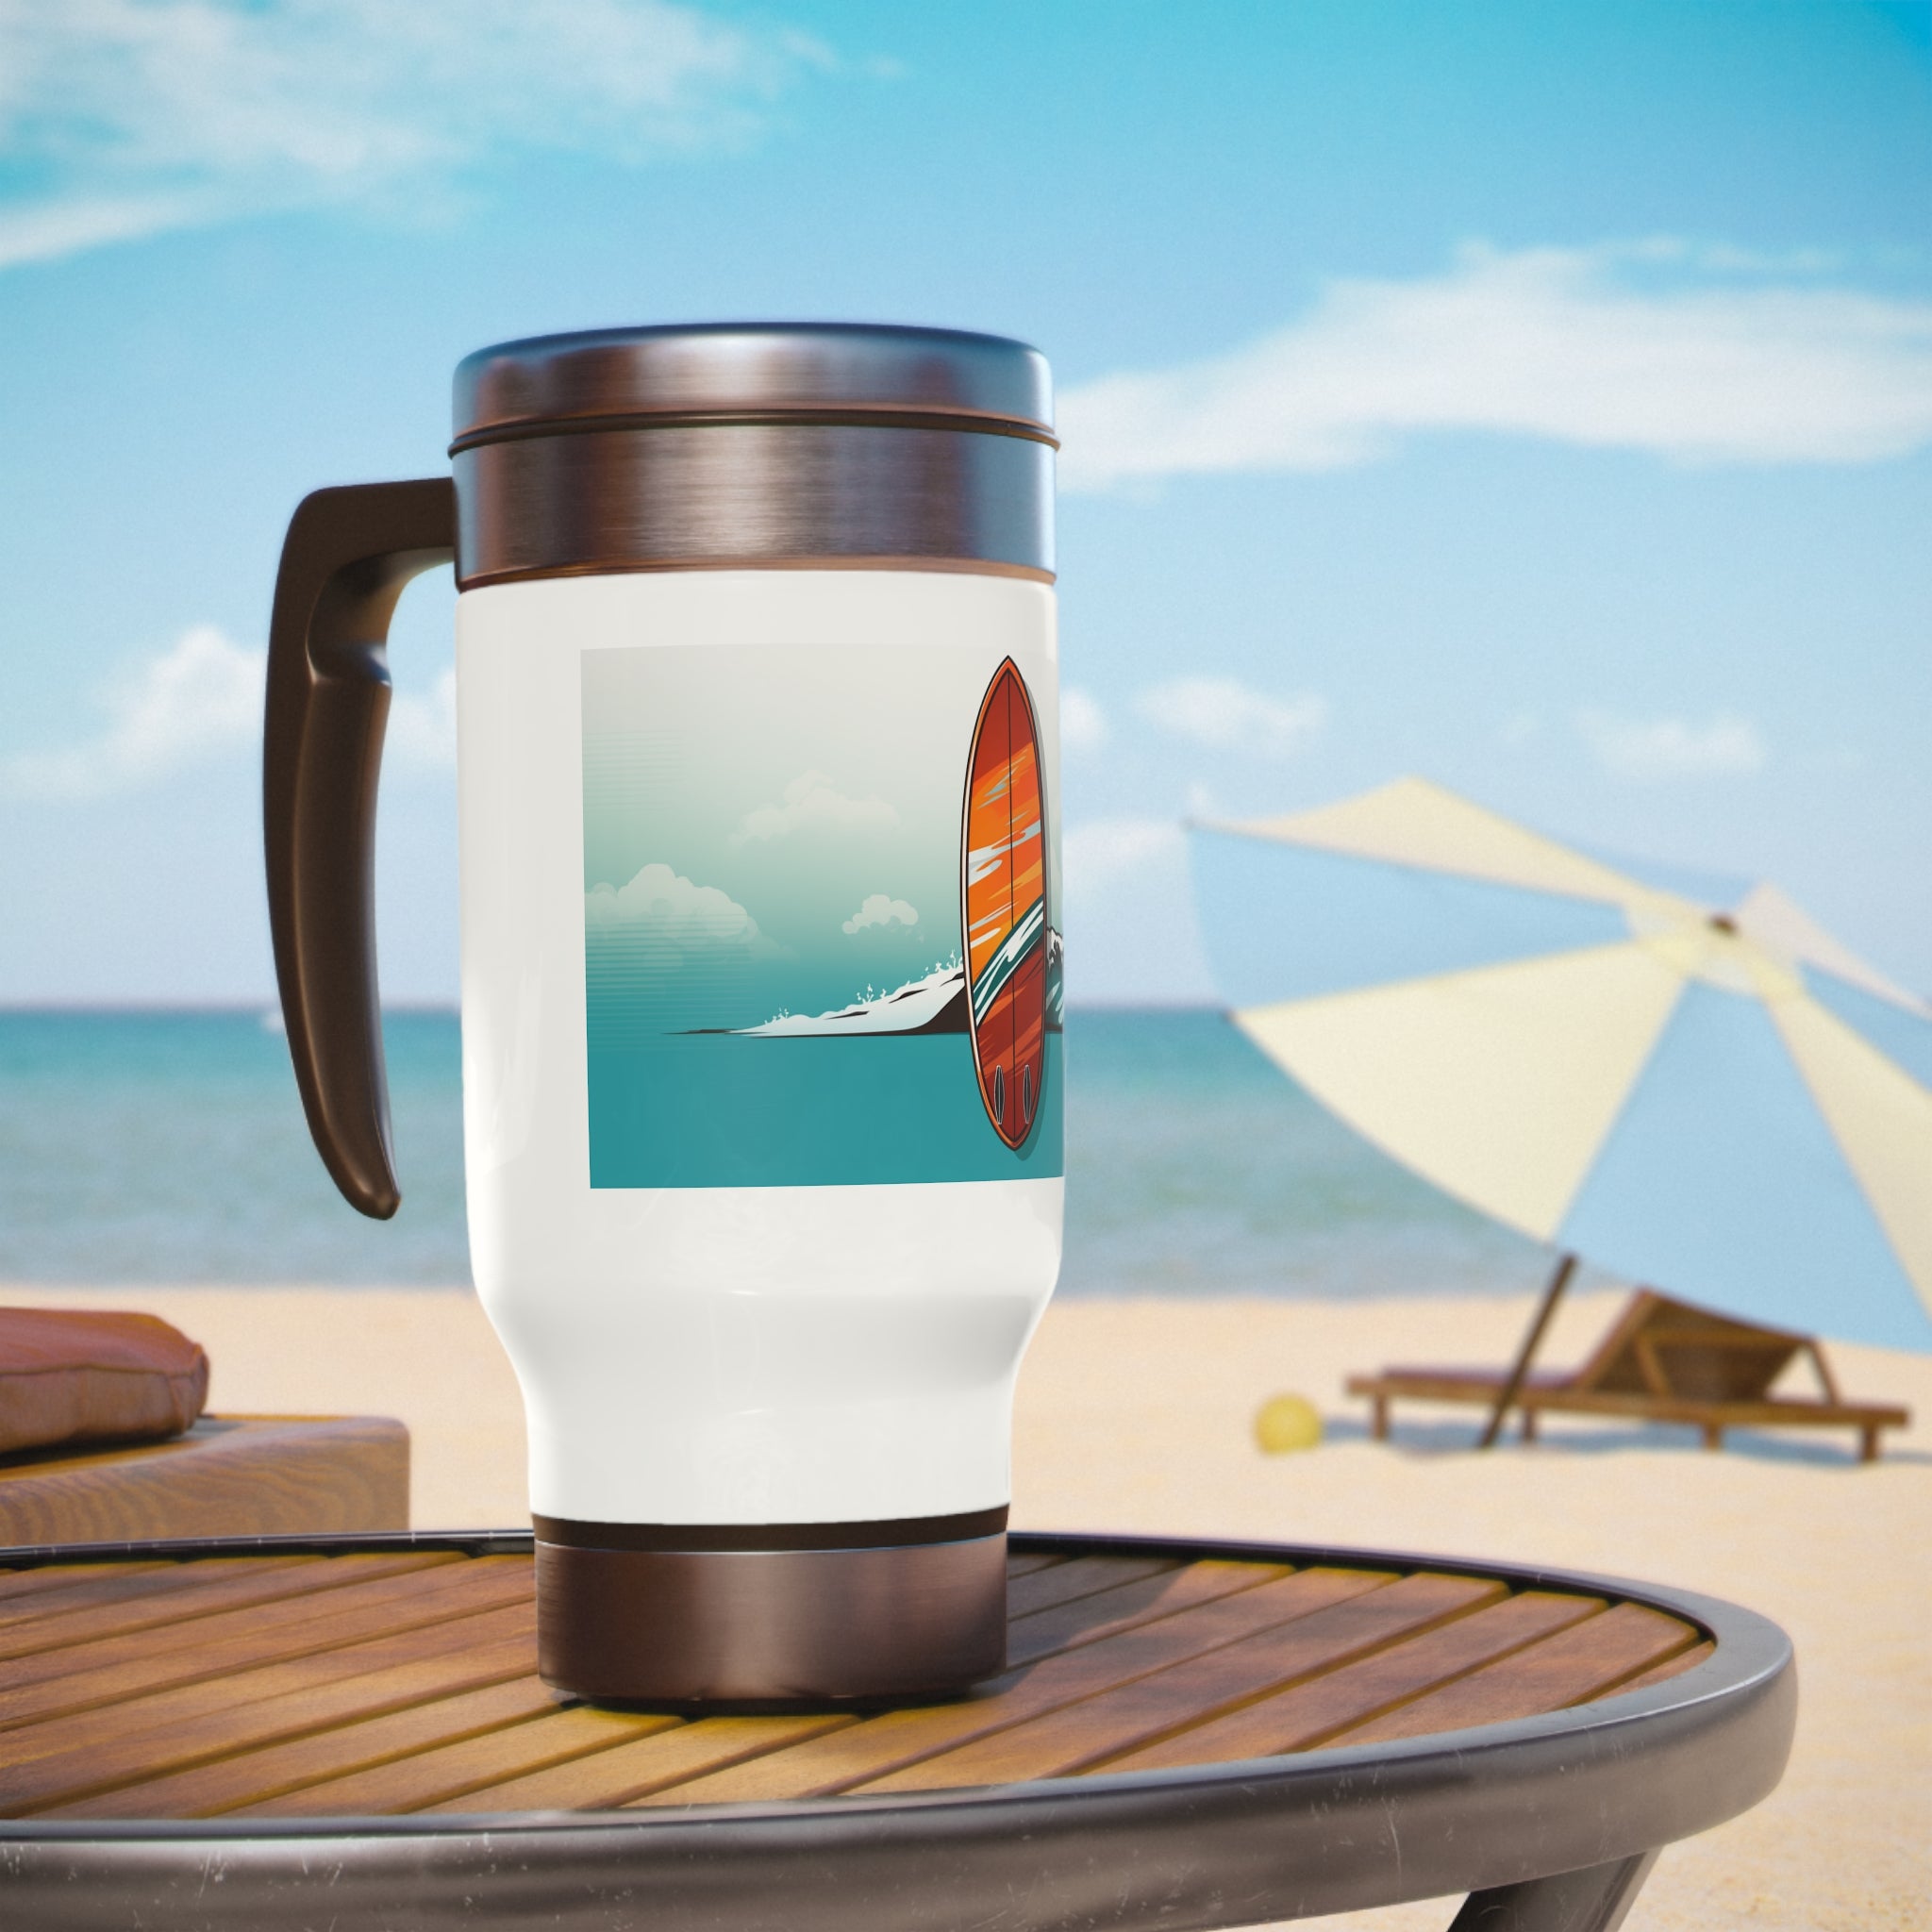 Stainless Steel Travel Mug with Handle, 14oz - Pop Art, Surfboard